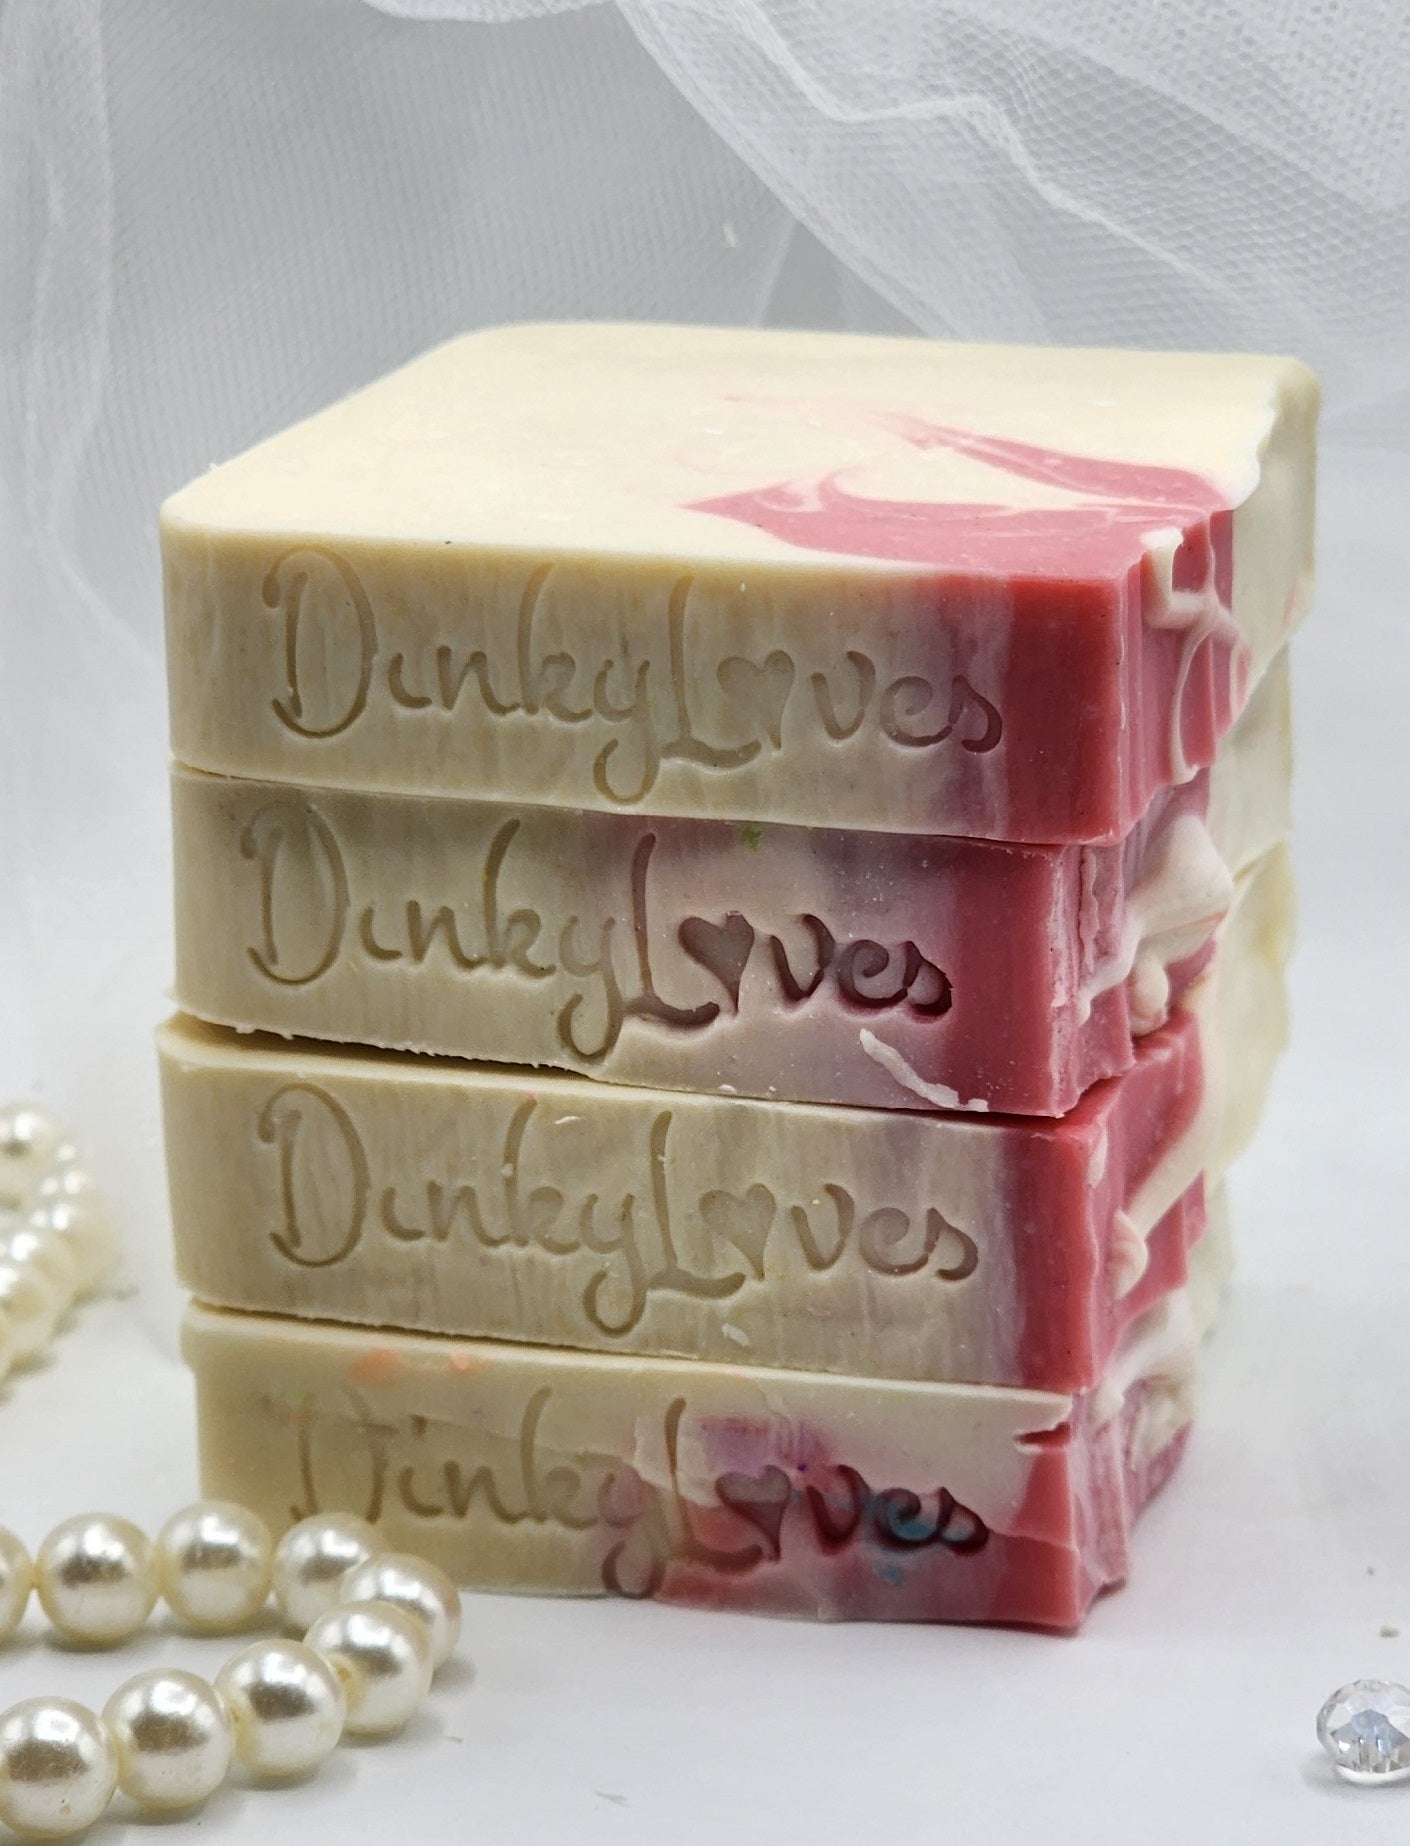 MACINTOSH APPLE / GOAT'S MILK SOAP / FALL SOAPS / AUTUMN SOAP / Bar Soap / Gift Soap / Gift Idea / Handmade Soap / Cold Process Soap